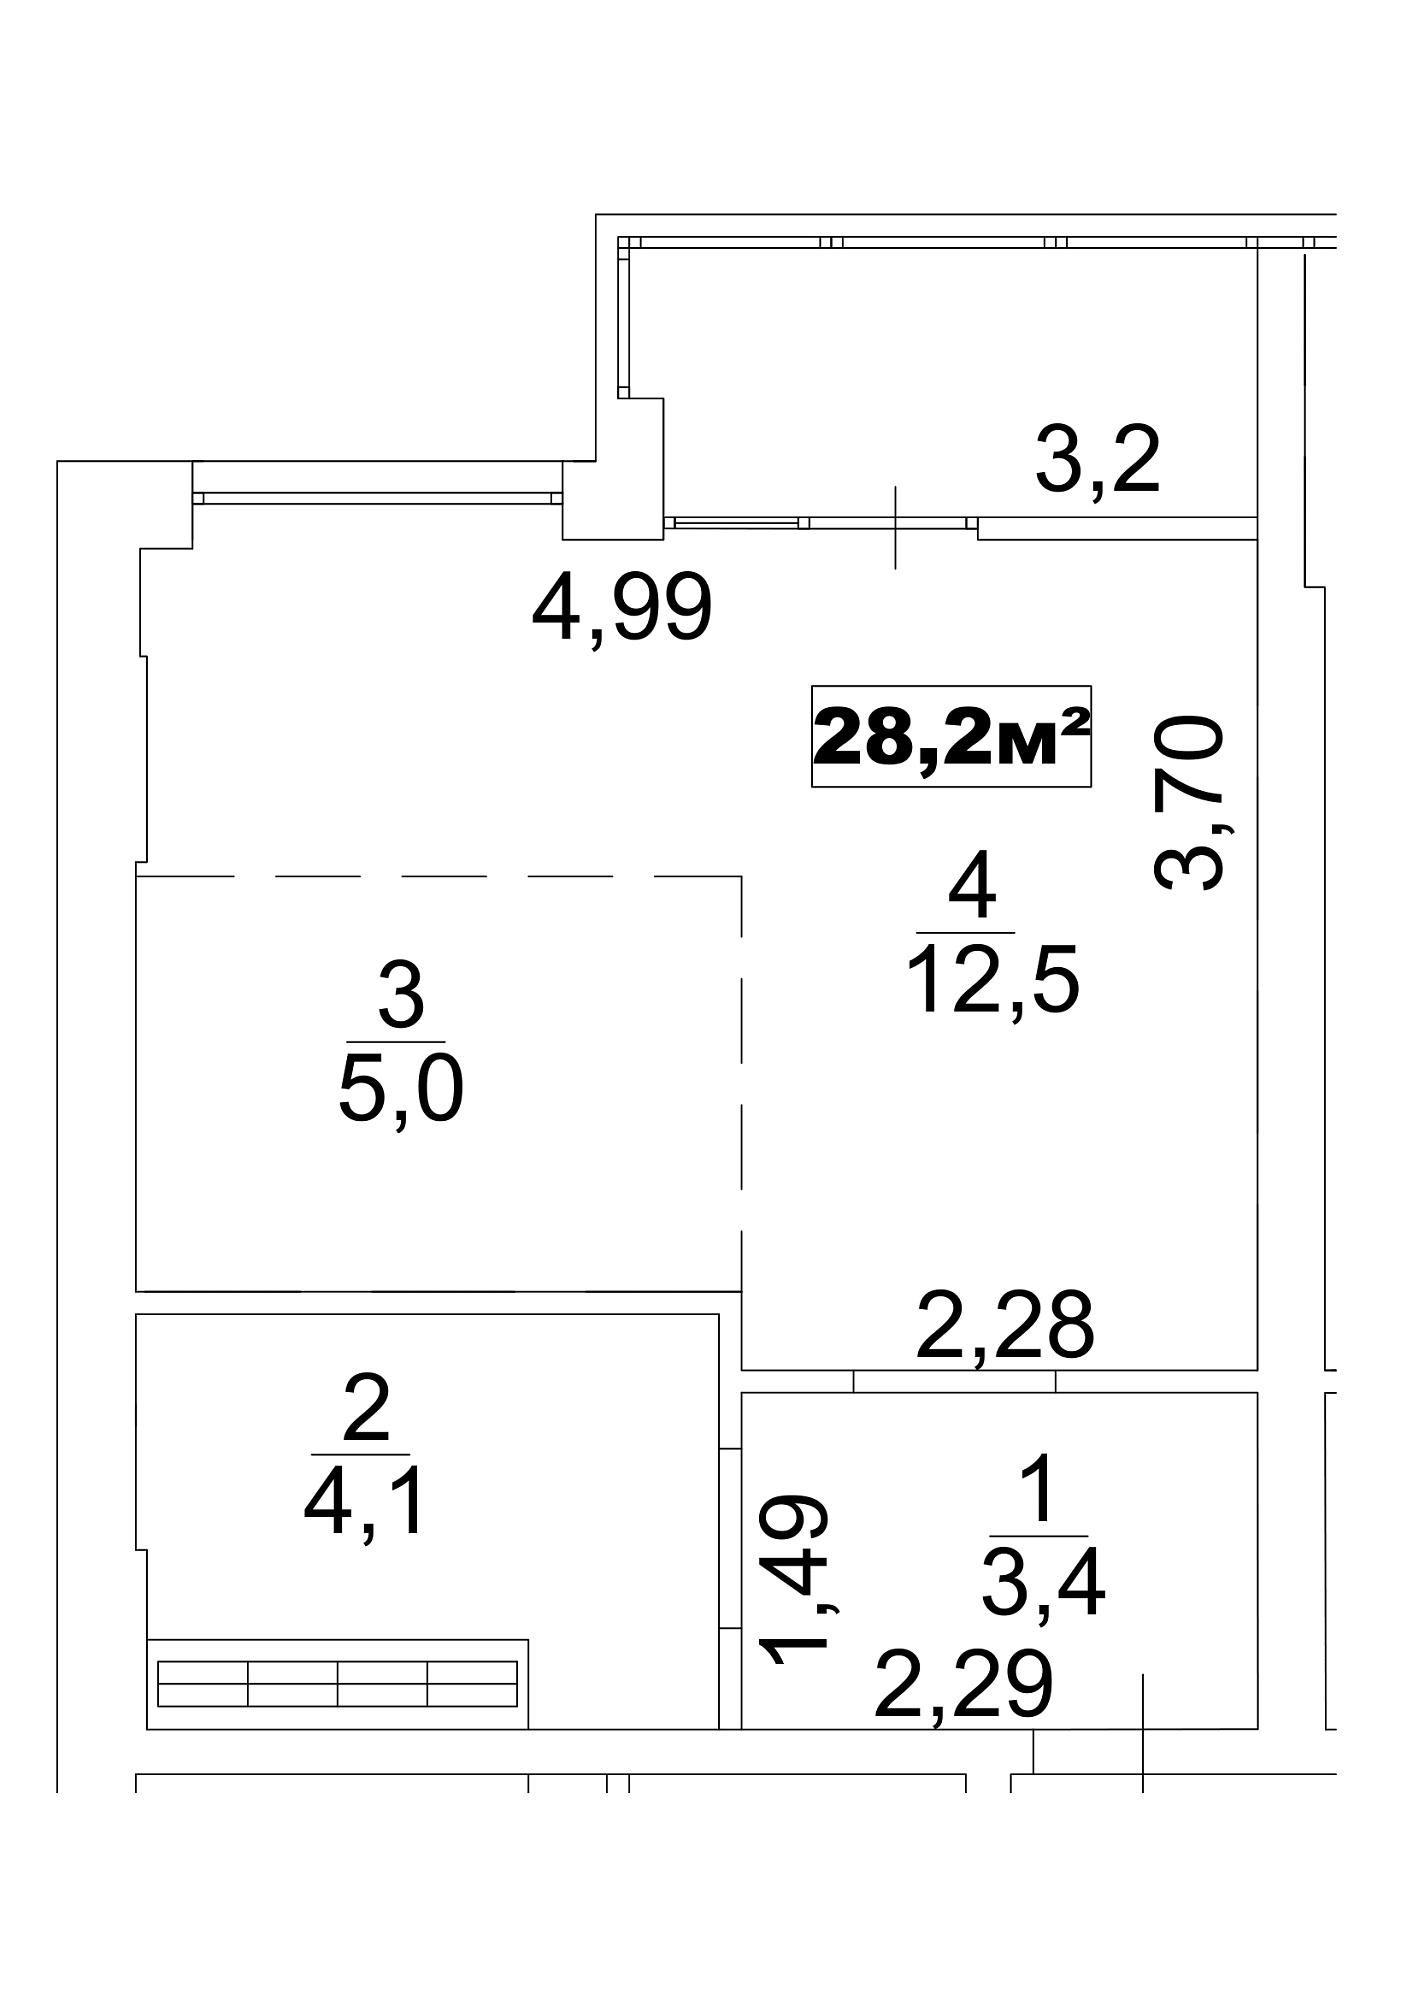 Планировка Smart-квартира площей 28.2м2, AB-13-07/0054б.